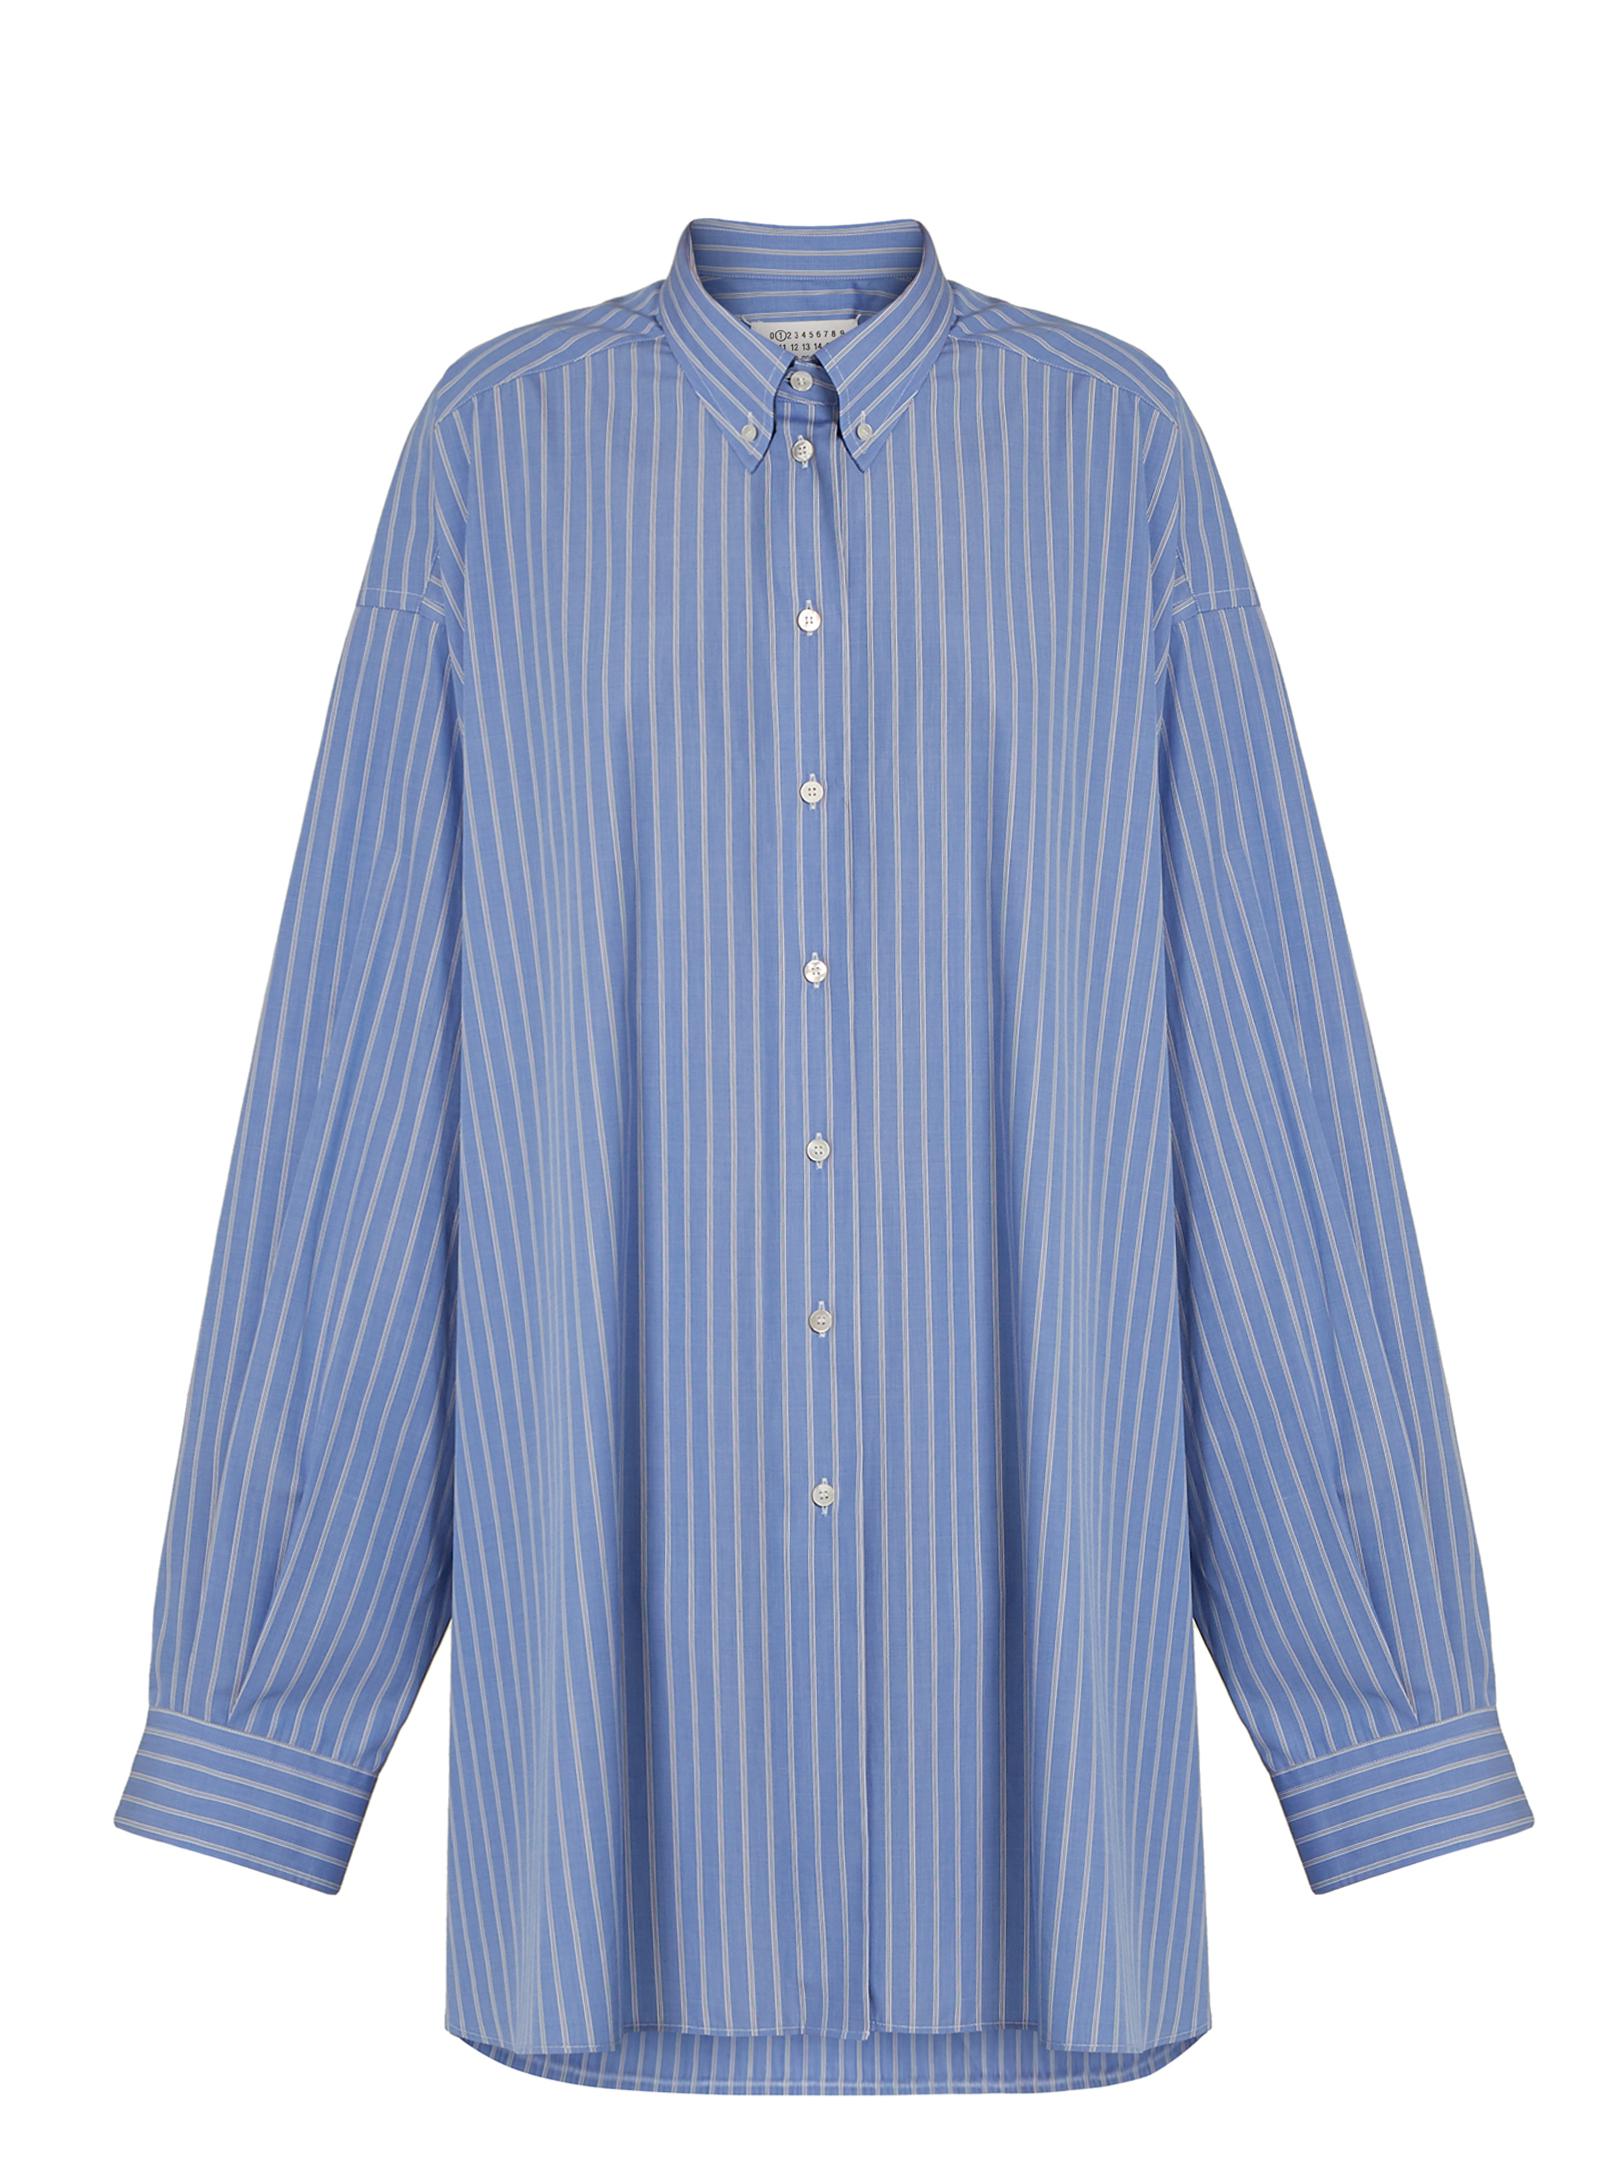 Maison Margiela Oversized Striped Cotton Shirtdress in Blue - Lyst